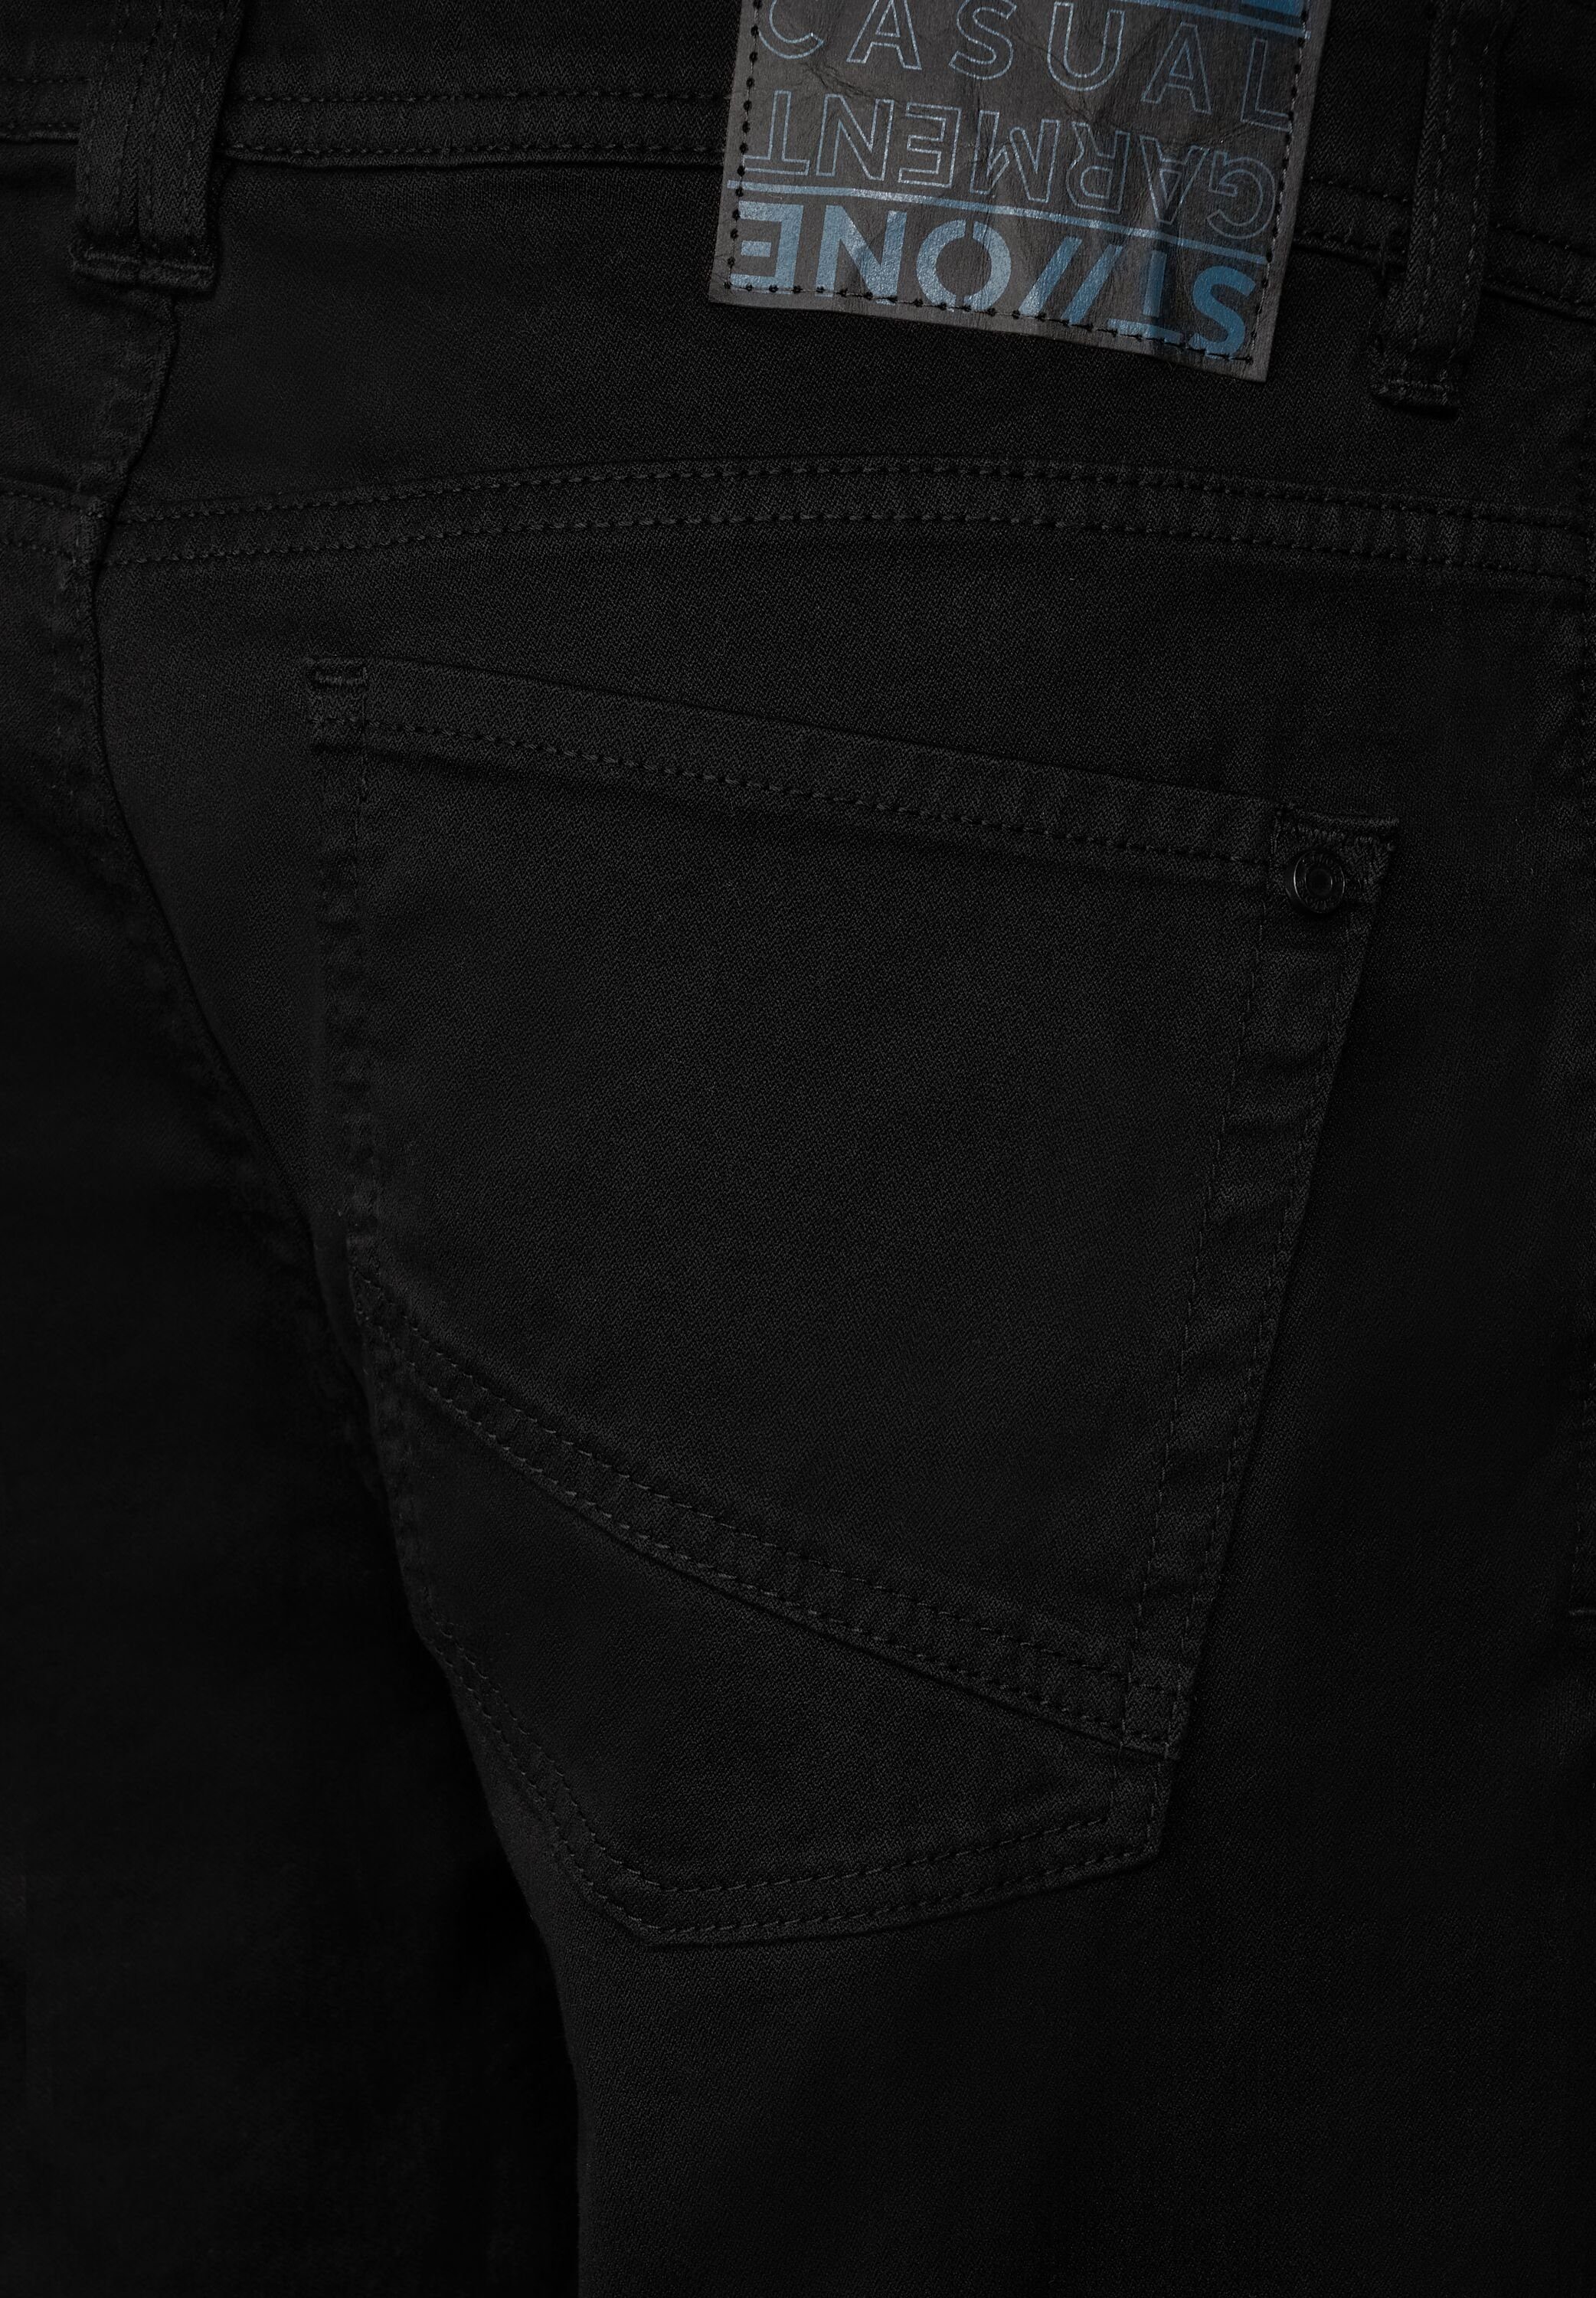 STREET ONE MEN 5-Pocket-Style Black Stoffhose